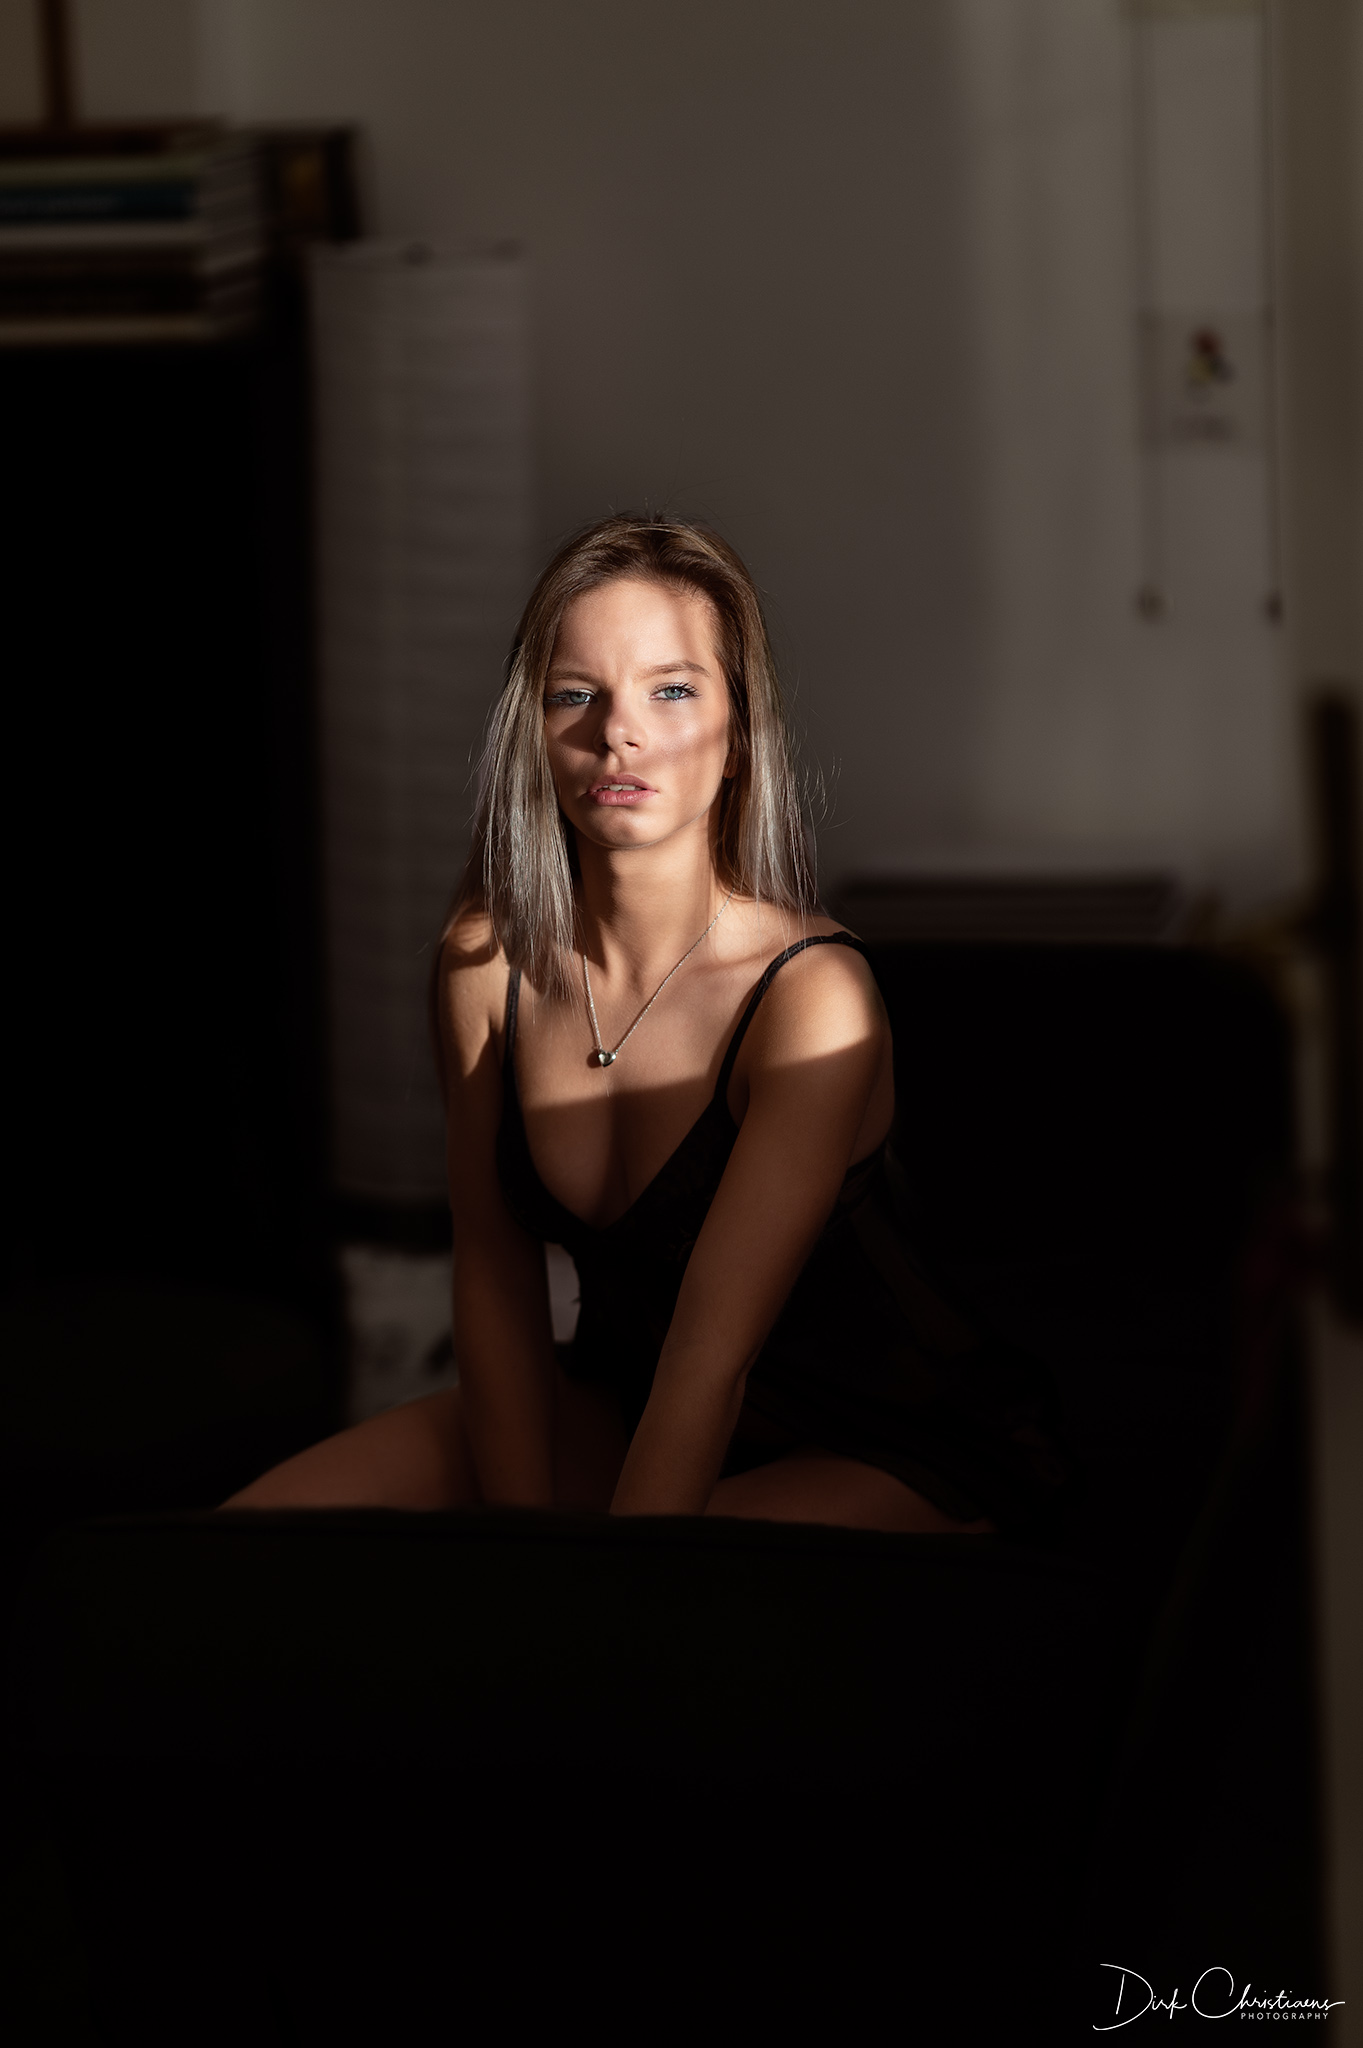 Stéphanie Onkelinx, model from Belgium at a boudoir photoshoot